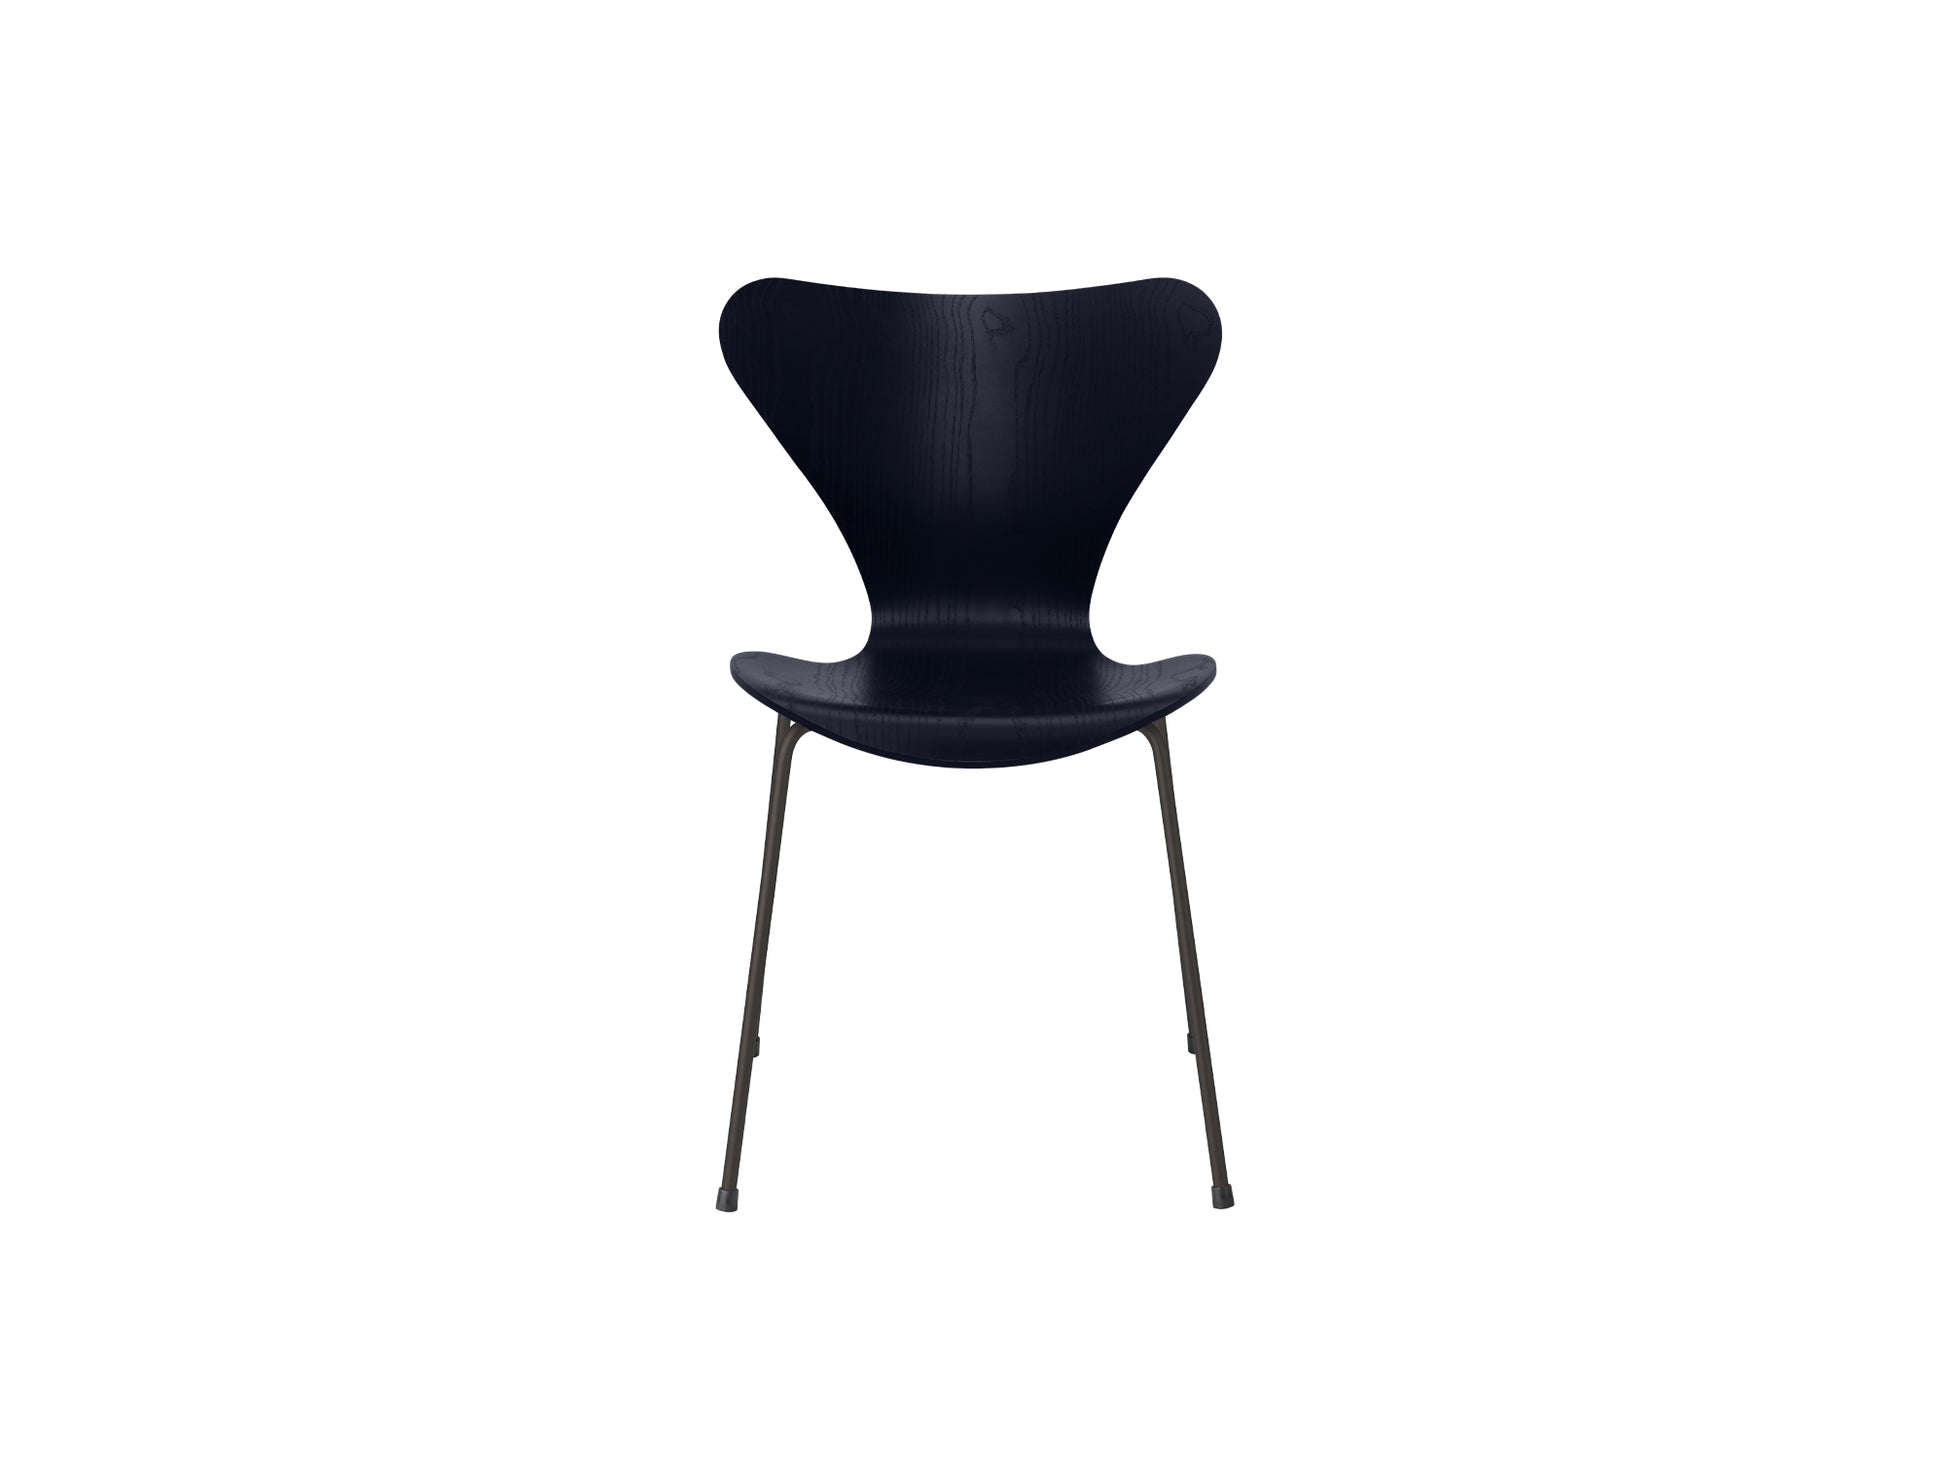 Series 7™ 3107 Dining Chair by Fritz Hansen - Midnight Blue Coloured Ash Veneer Shell / Warm Graphite Steel